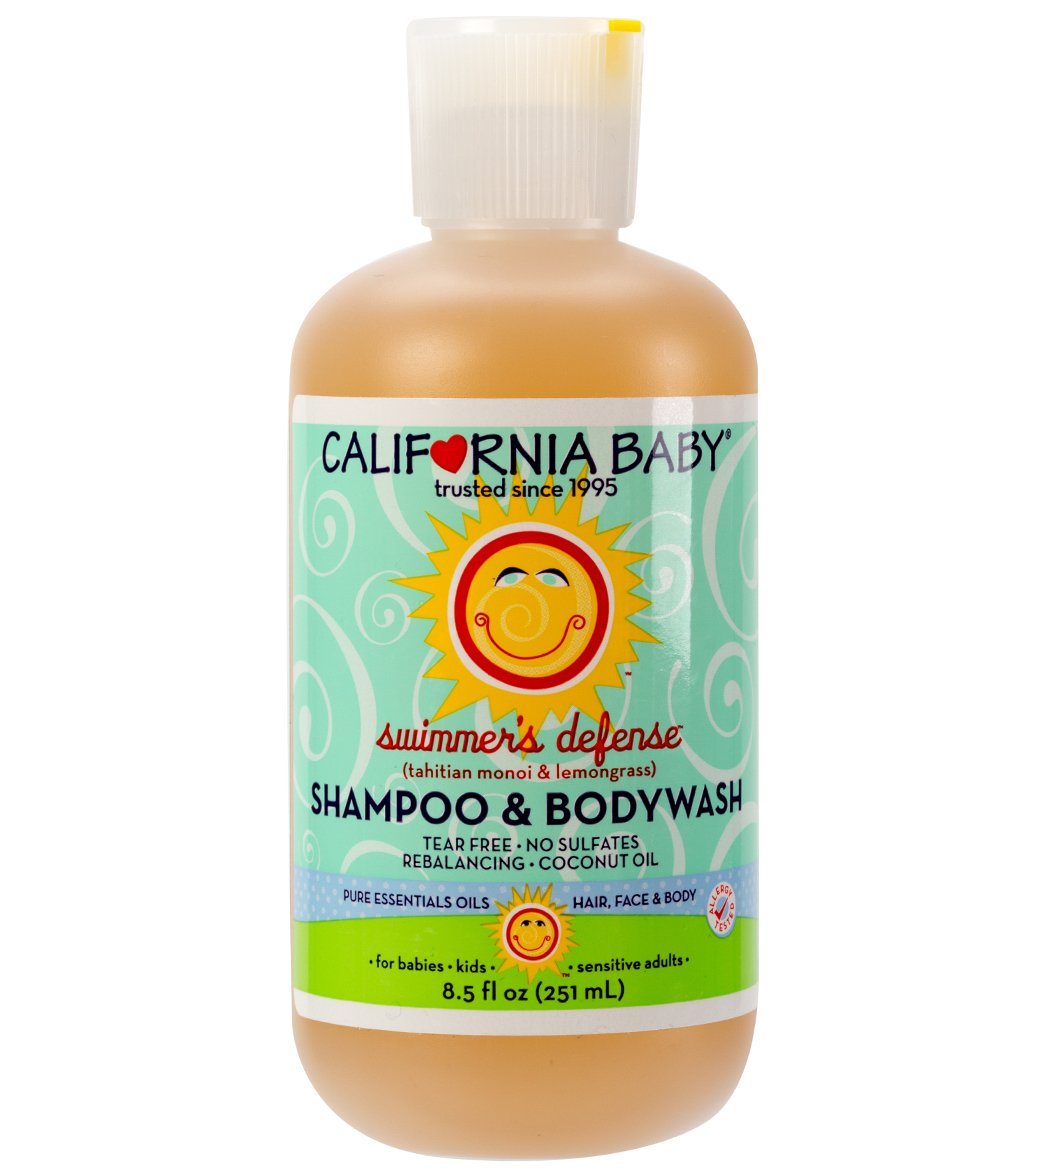 california baby swimmer's defense shampoo & bodywash